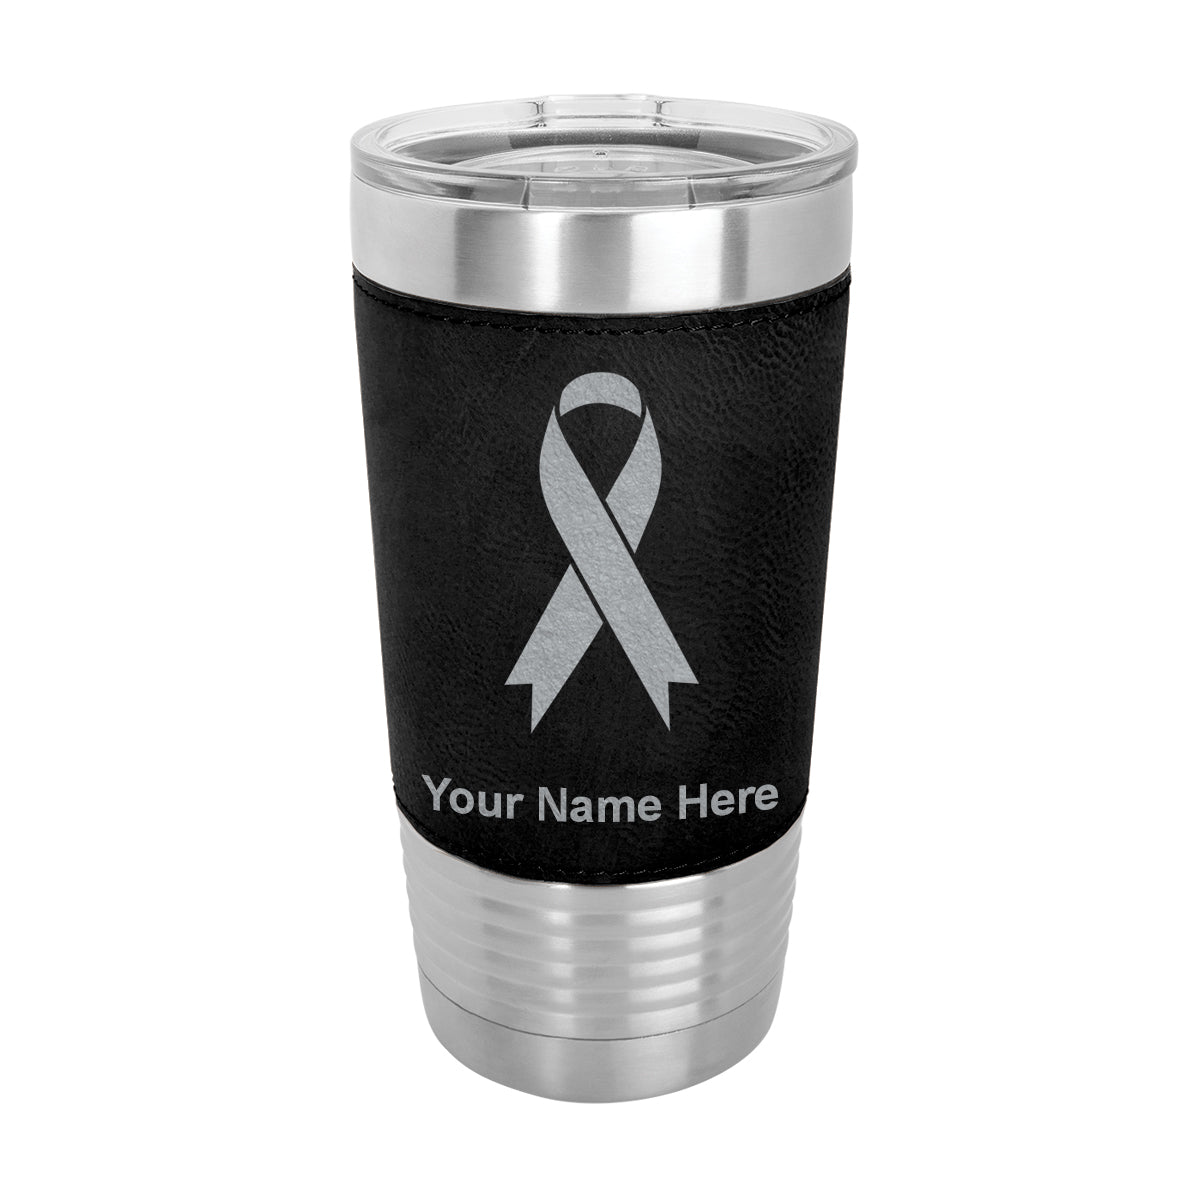 20oz Faux Leather Tumbler Mug, Cancer Awareness Ribbon, Personalized Engraving Included - LaserGram Custom Engraved Gifts